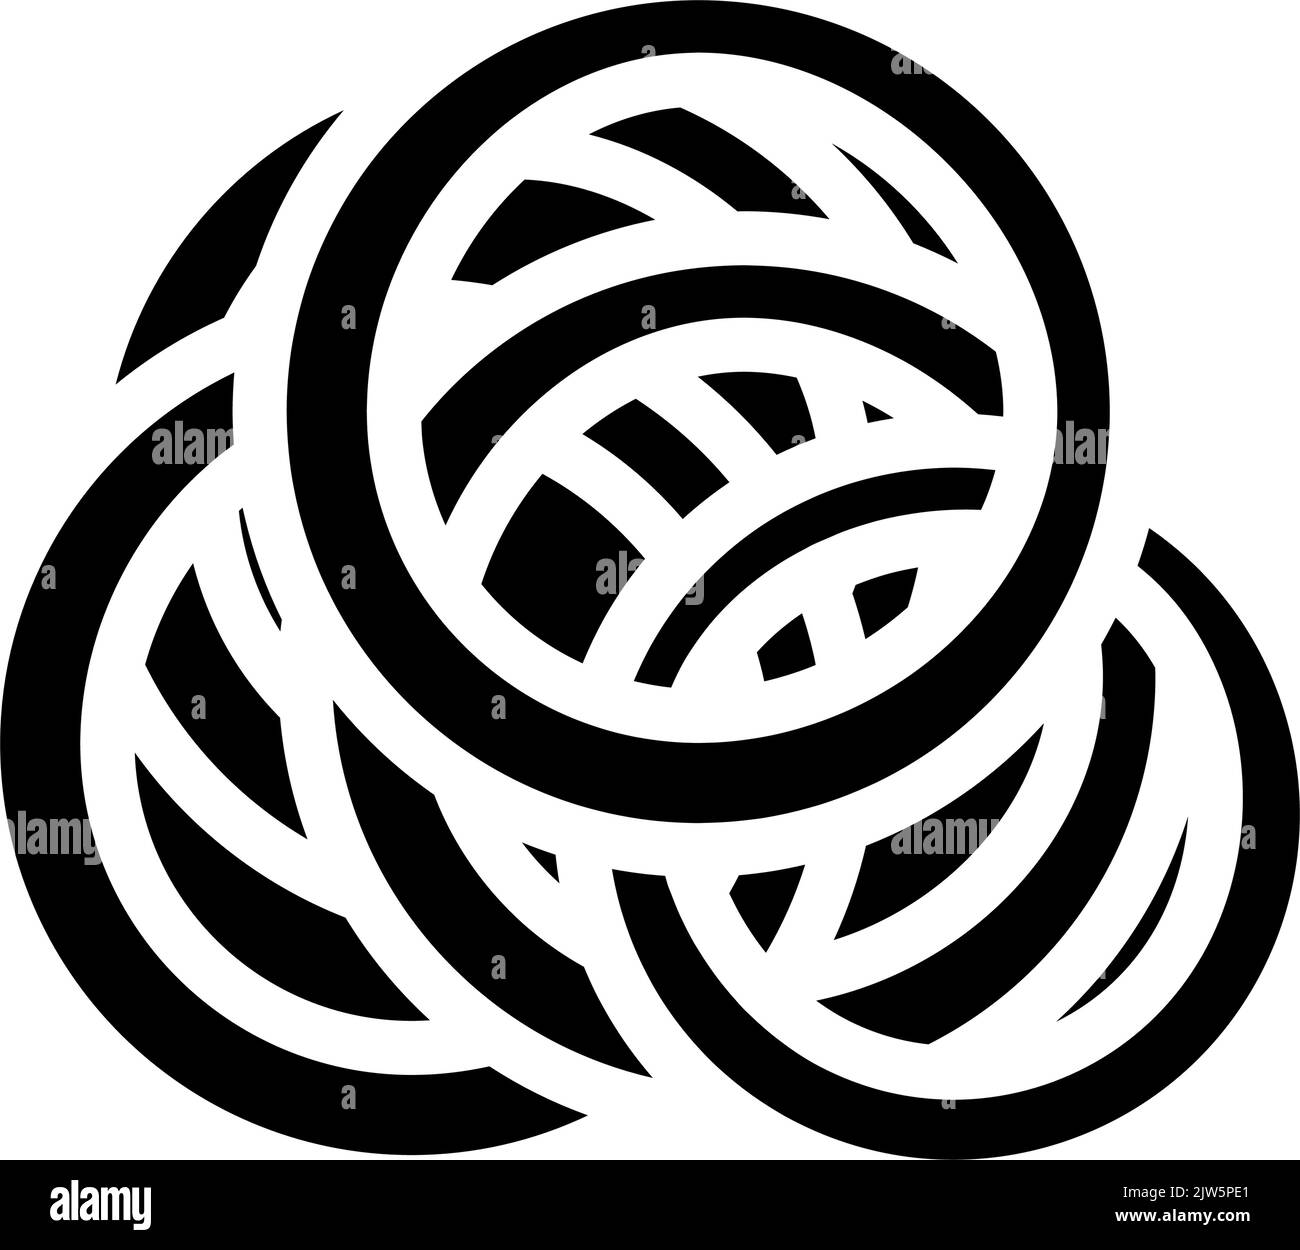 rings cut onion slice glyph icon vector illustration Stock Vector